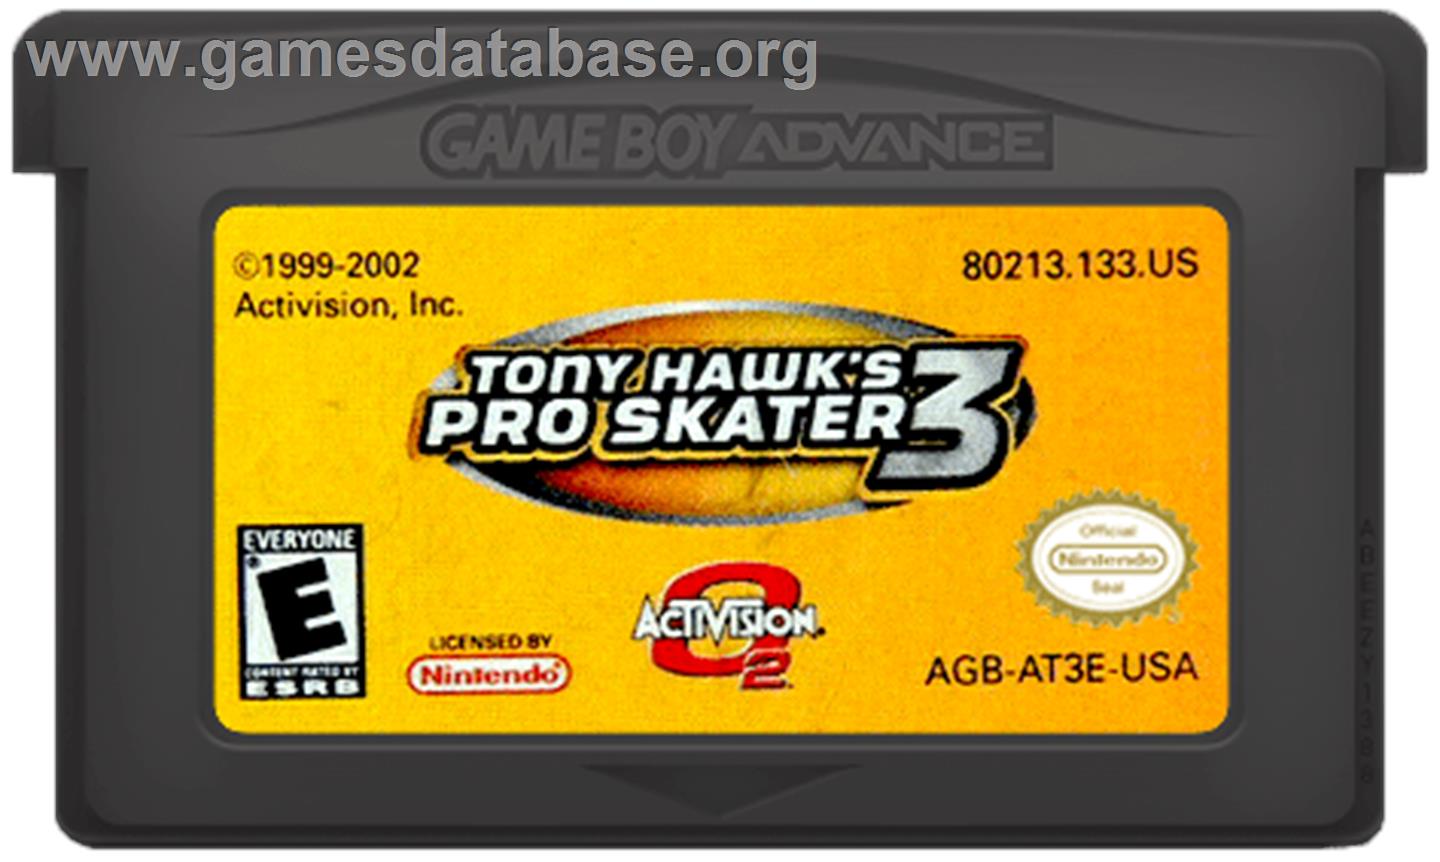 Tony Hawk's Pro Skater 3 - Nintendo Game Boy Advance - Artwork - Cartridge